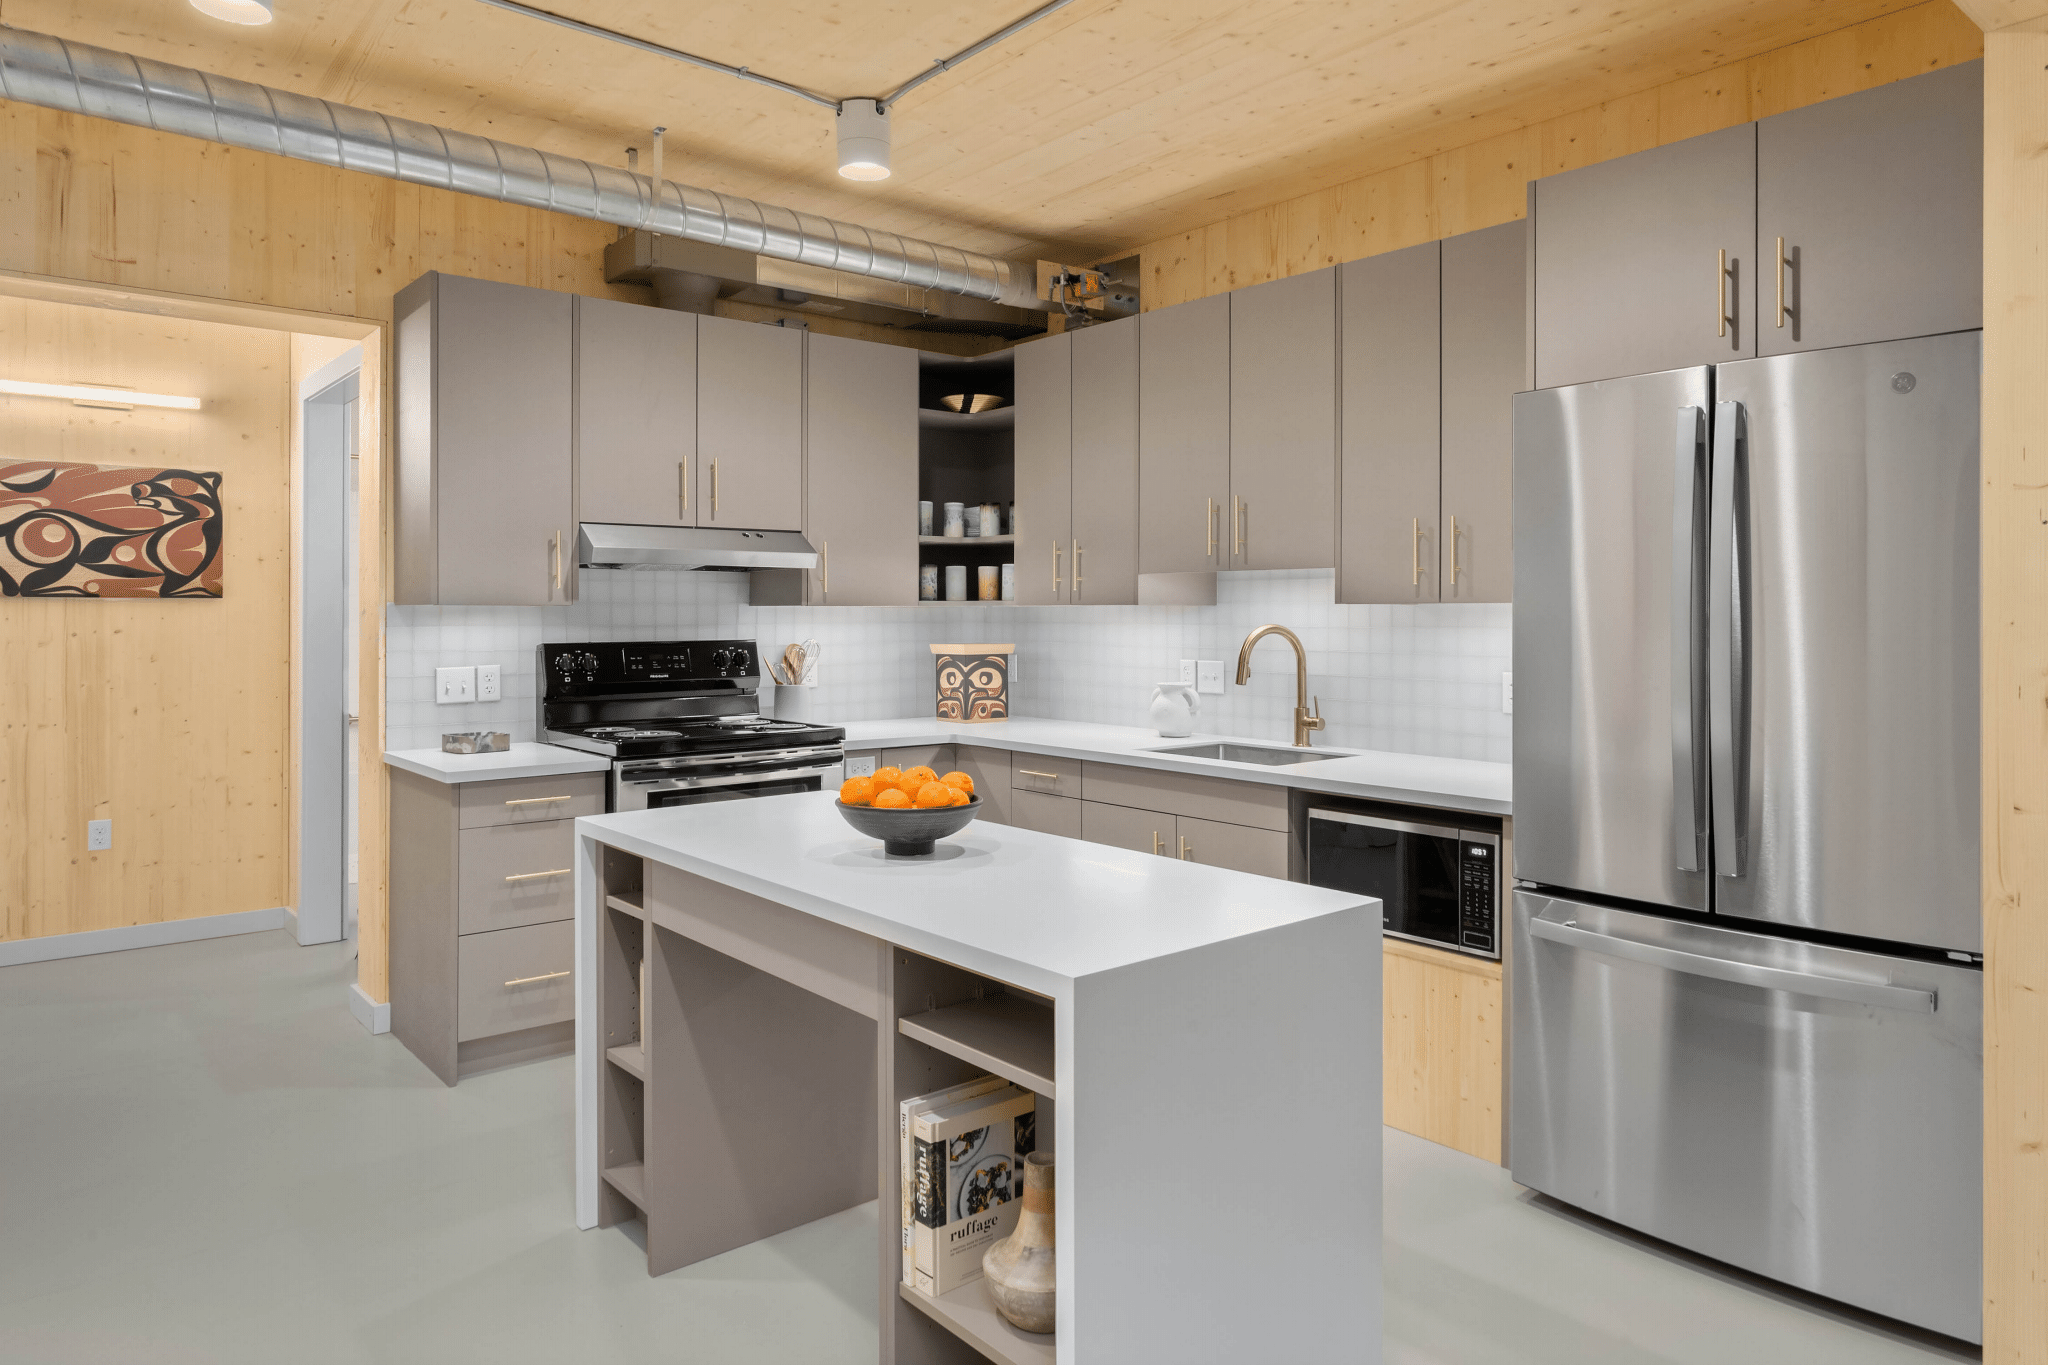 ModPro interior kitchen modular cross-laminated timber project